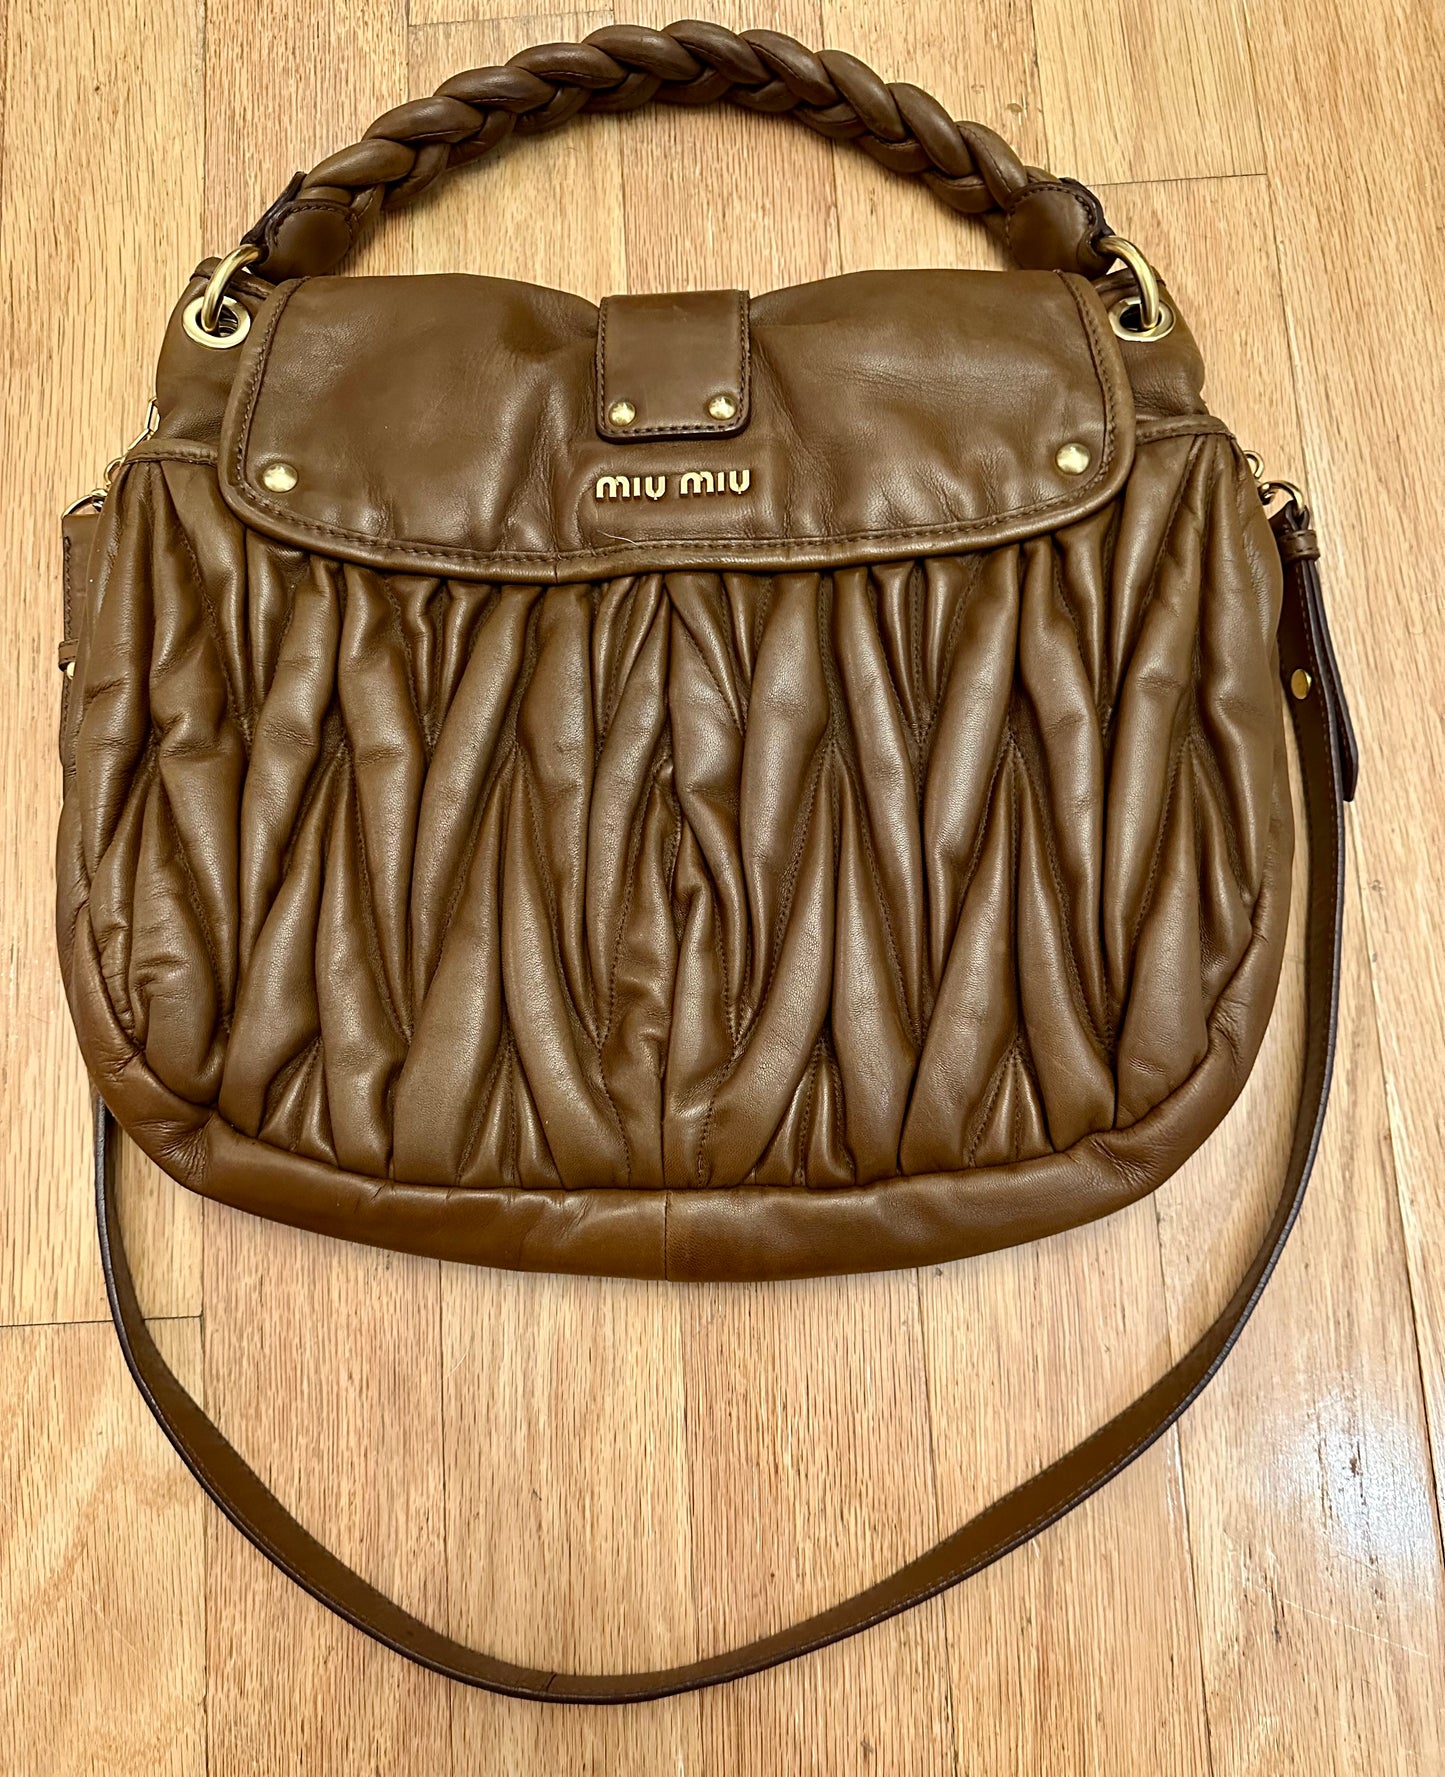 Rare Miu Miu Braided Leather Hobo Bag